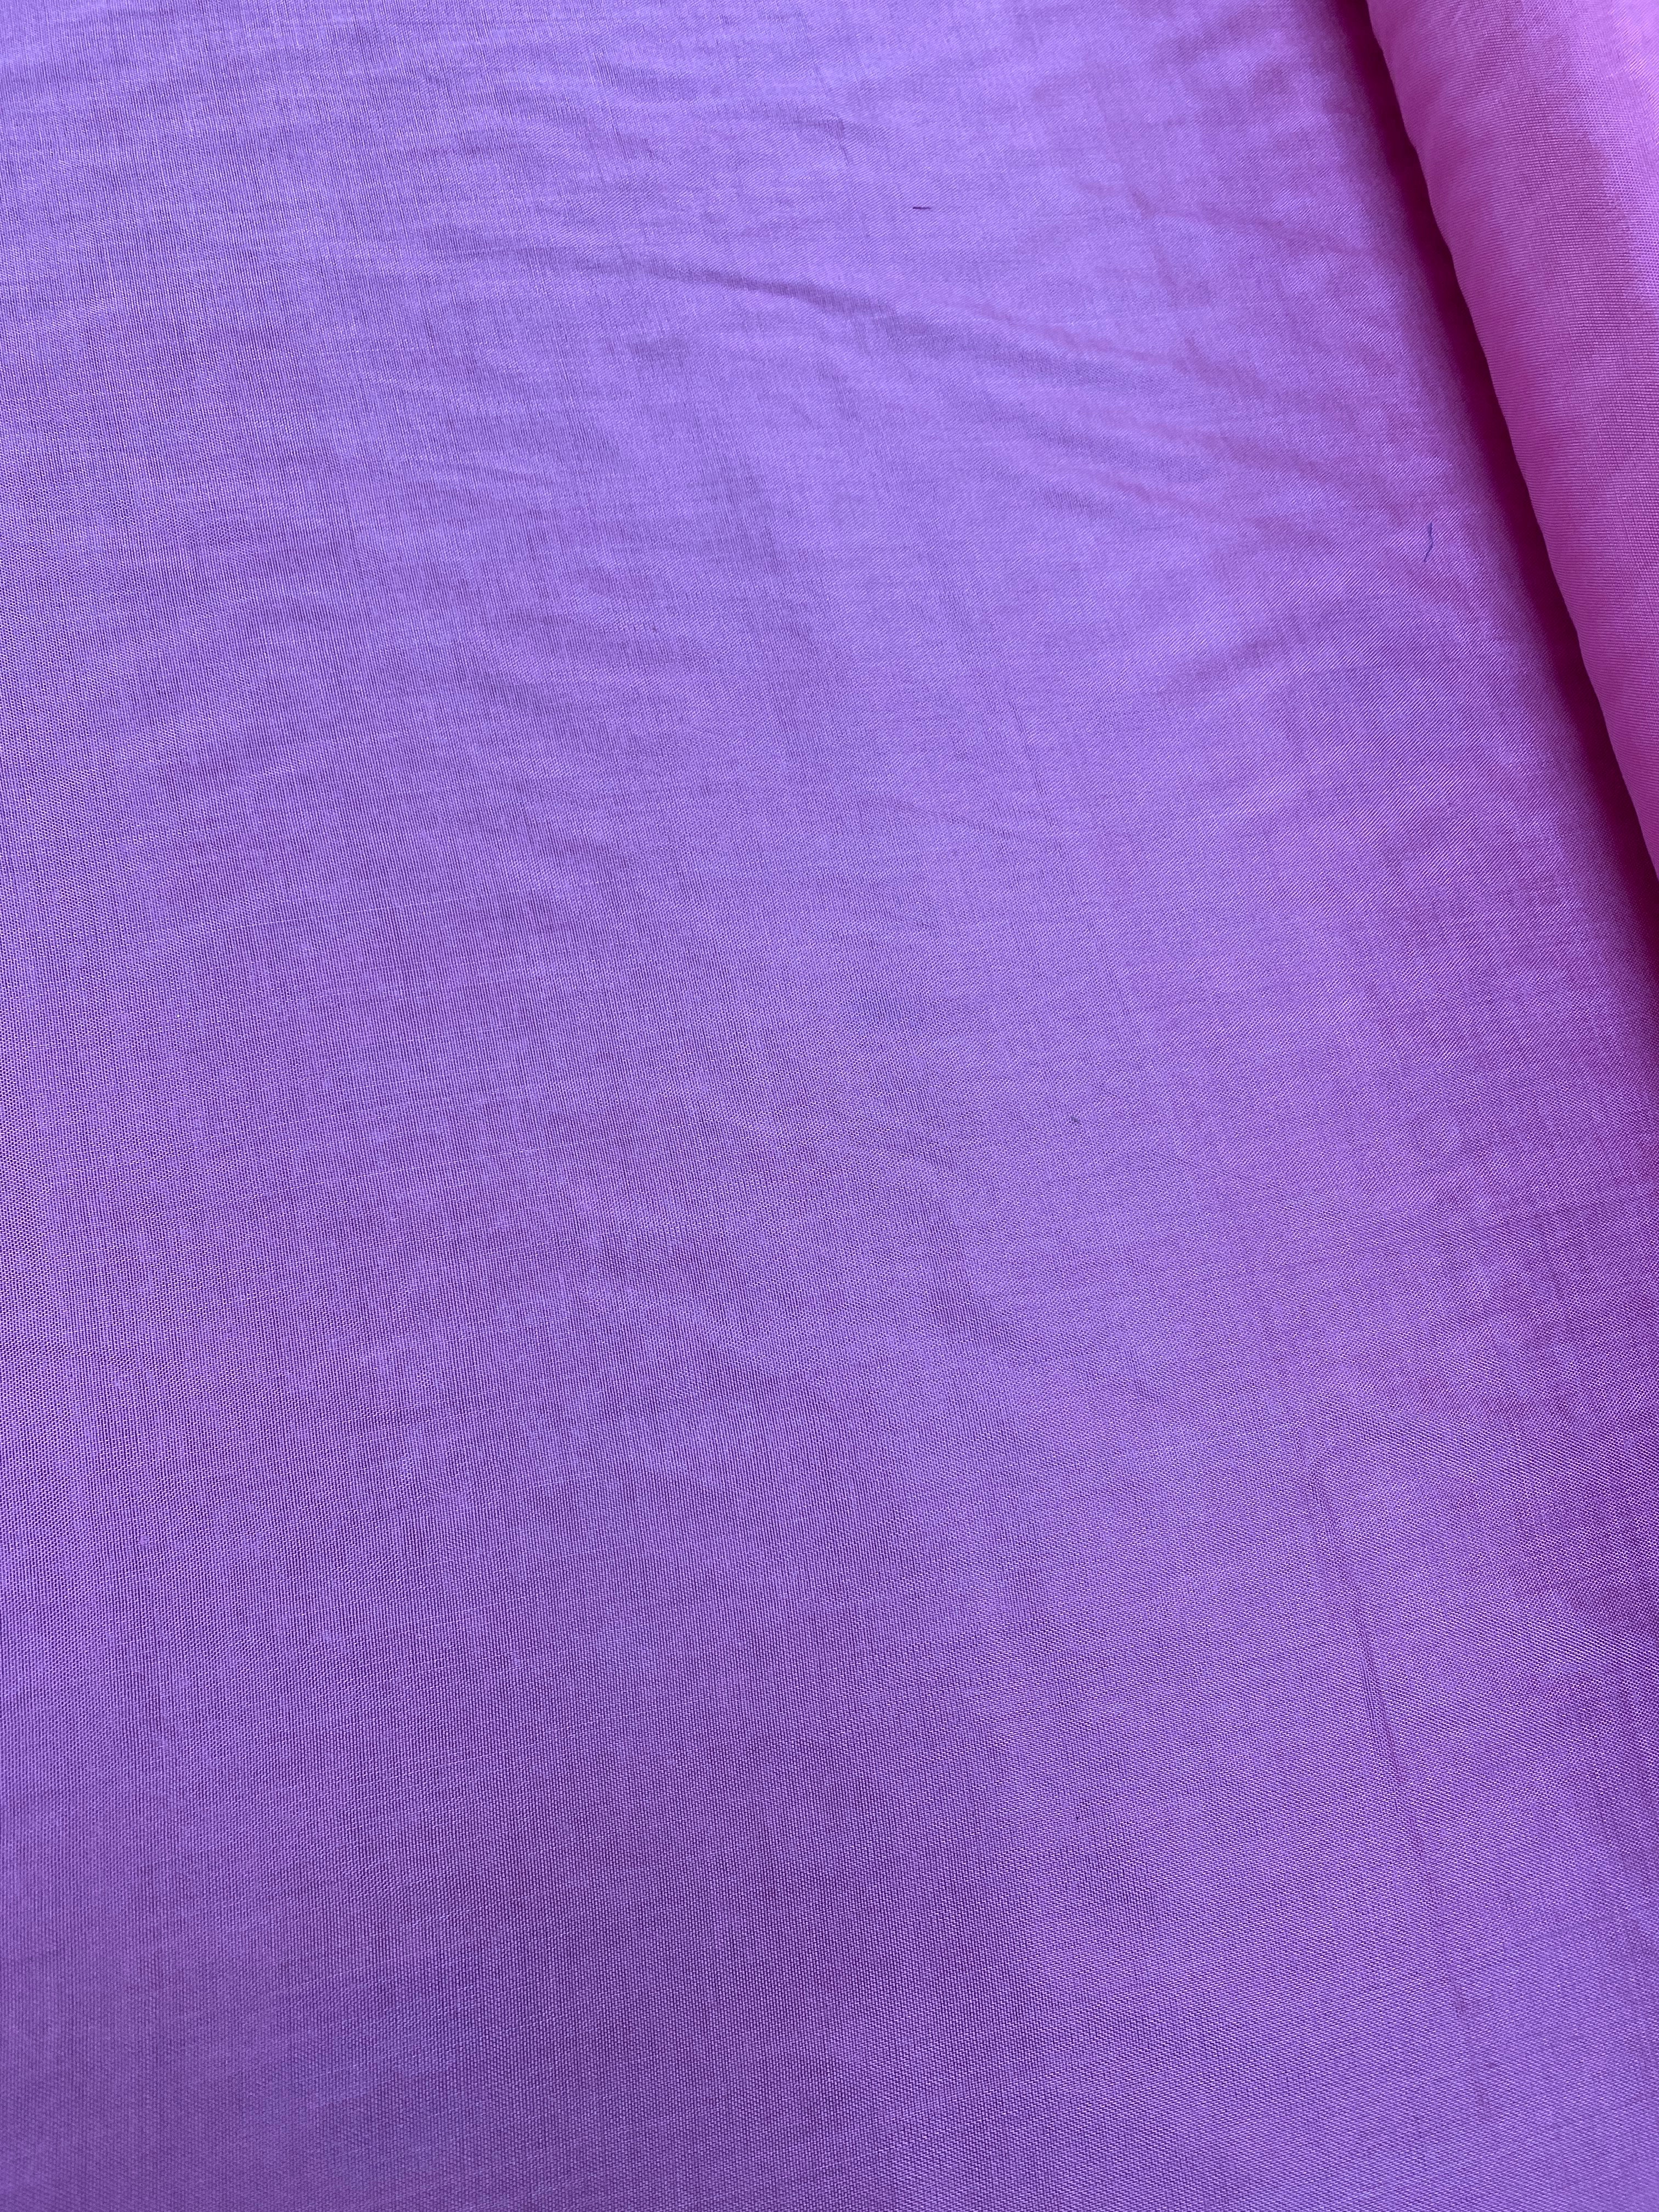 Grape Purple - Polyester